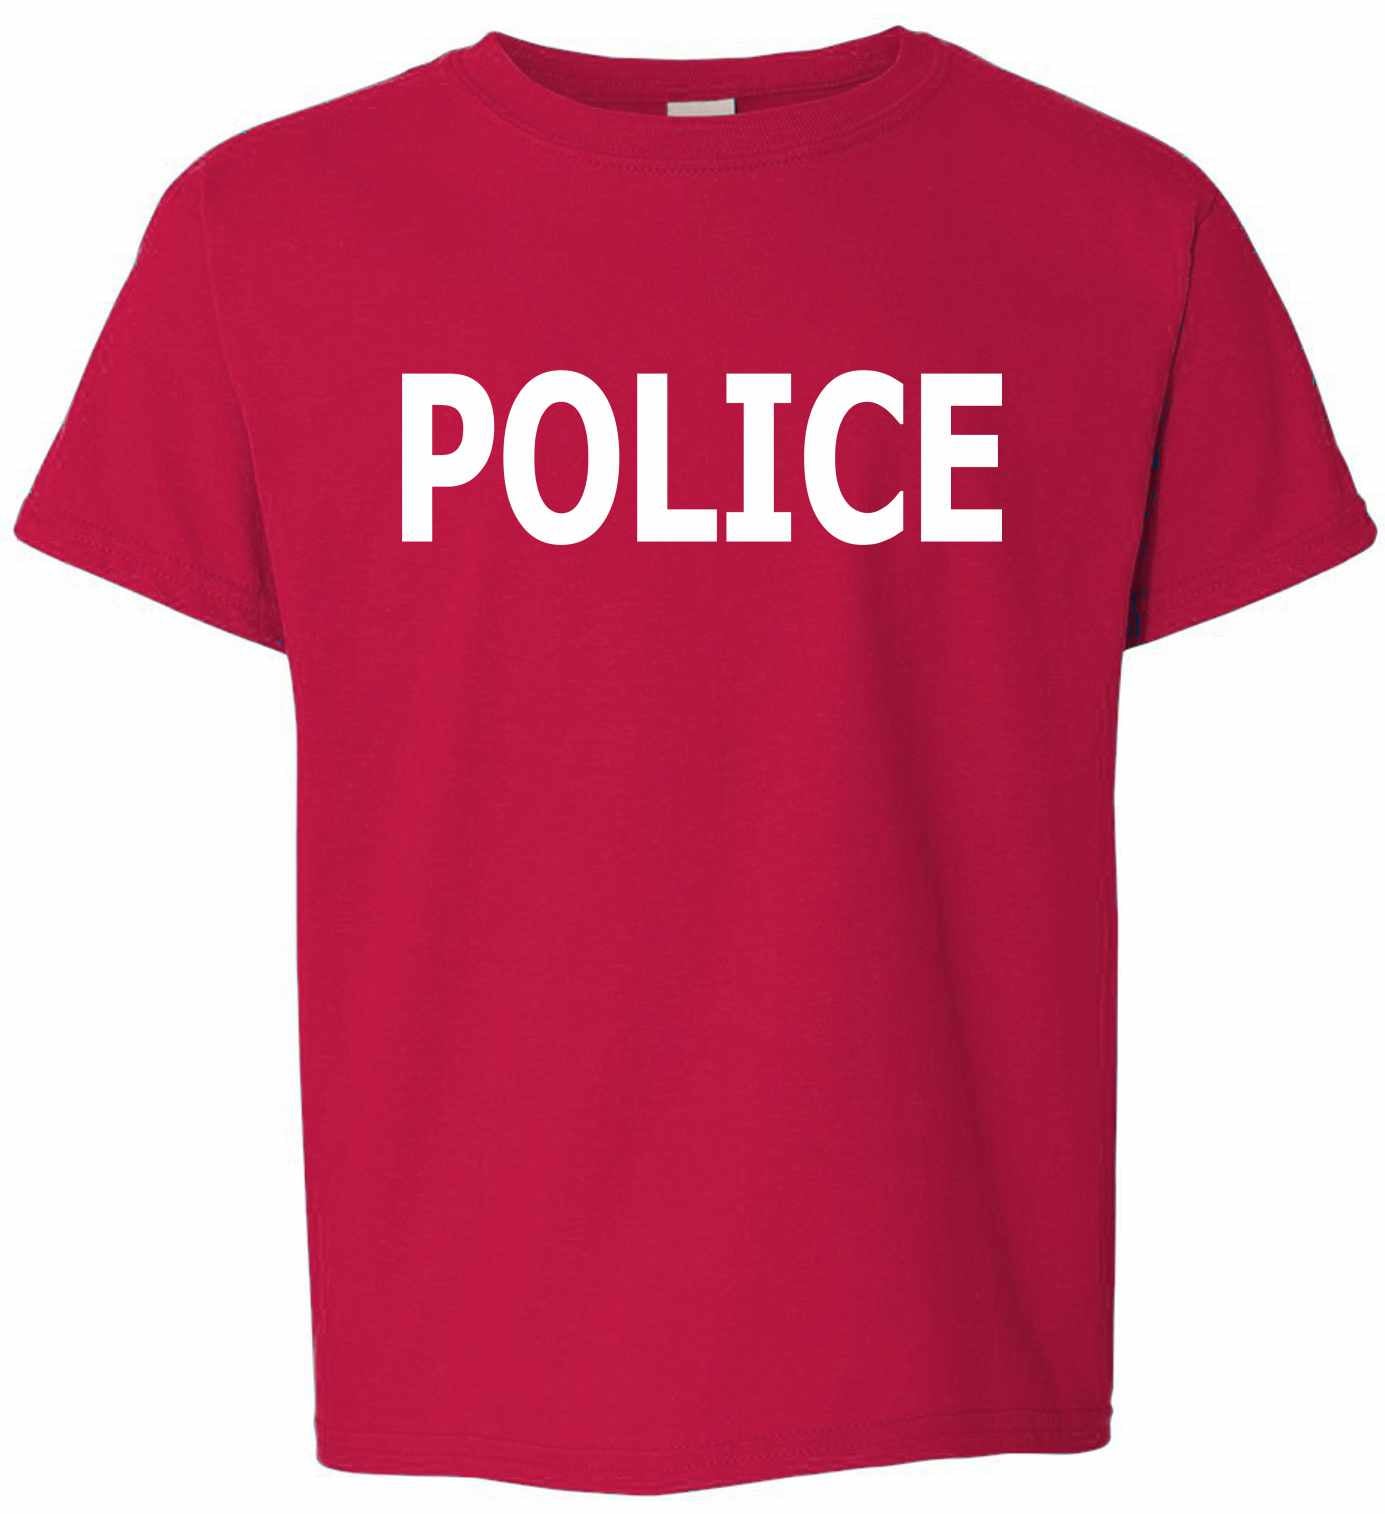 POLICE on Kids T-Shirt